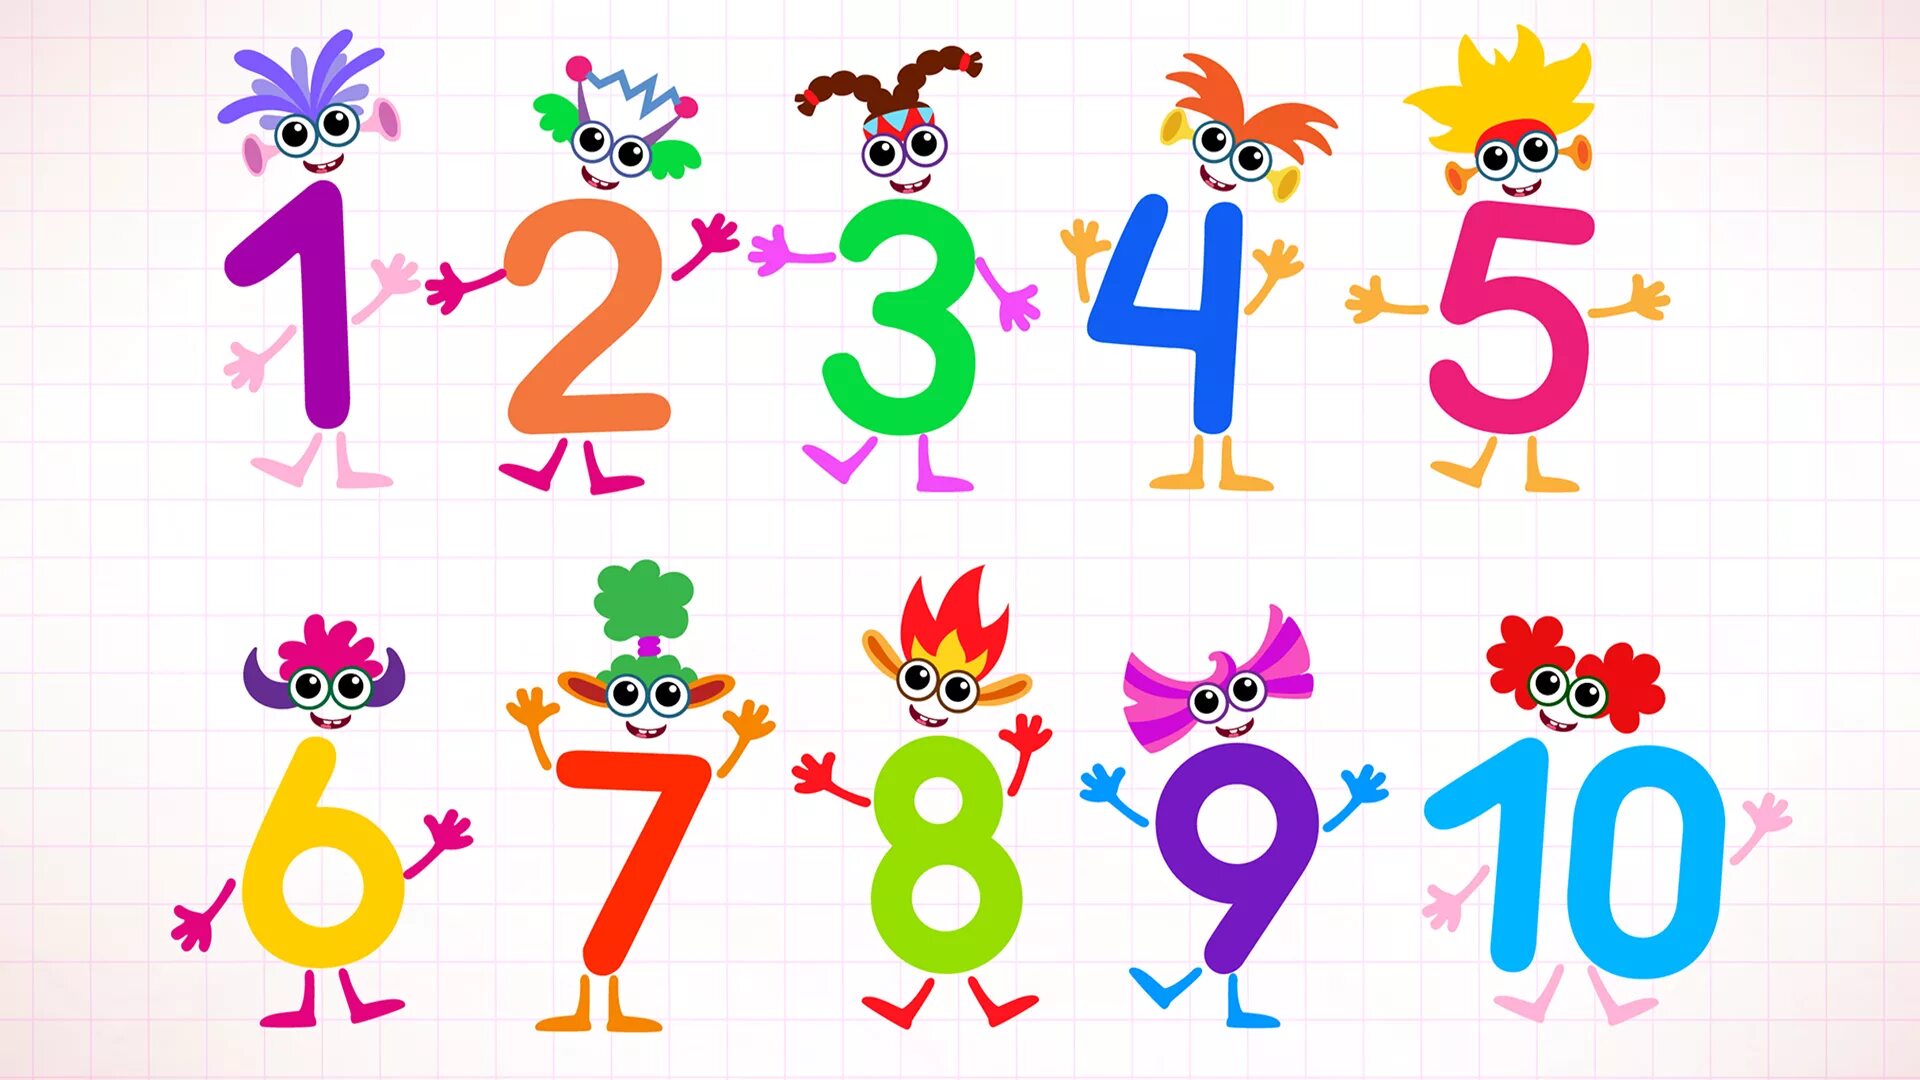 Цифру точка ру. Цифры картинки для детей. Цифры картинки для детей от 1 до 10. Цифры для дошкольников в картинках. Интересные цифры для детей.